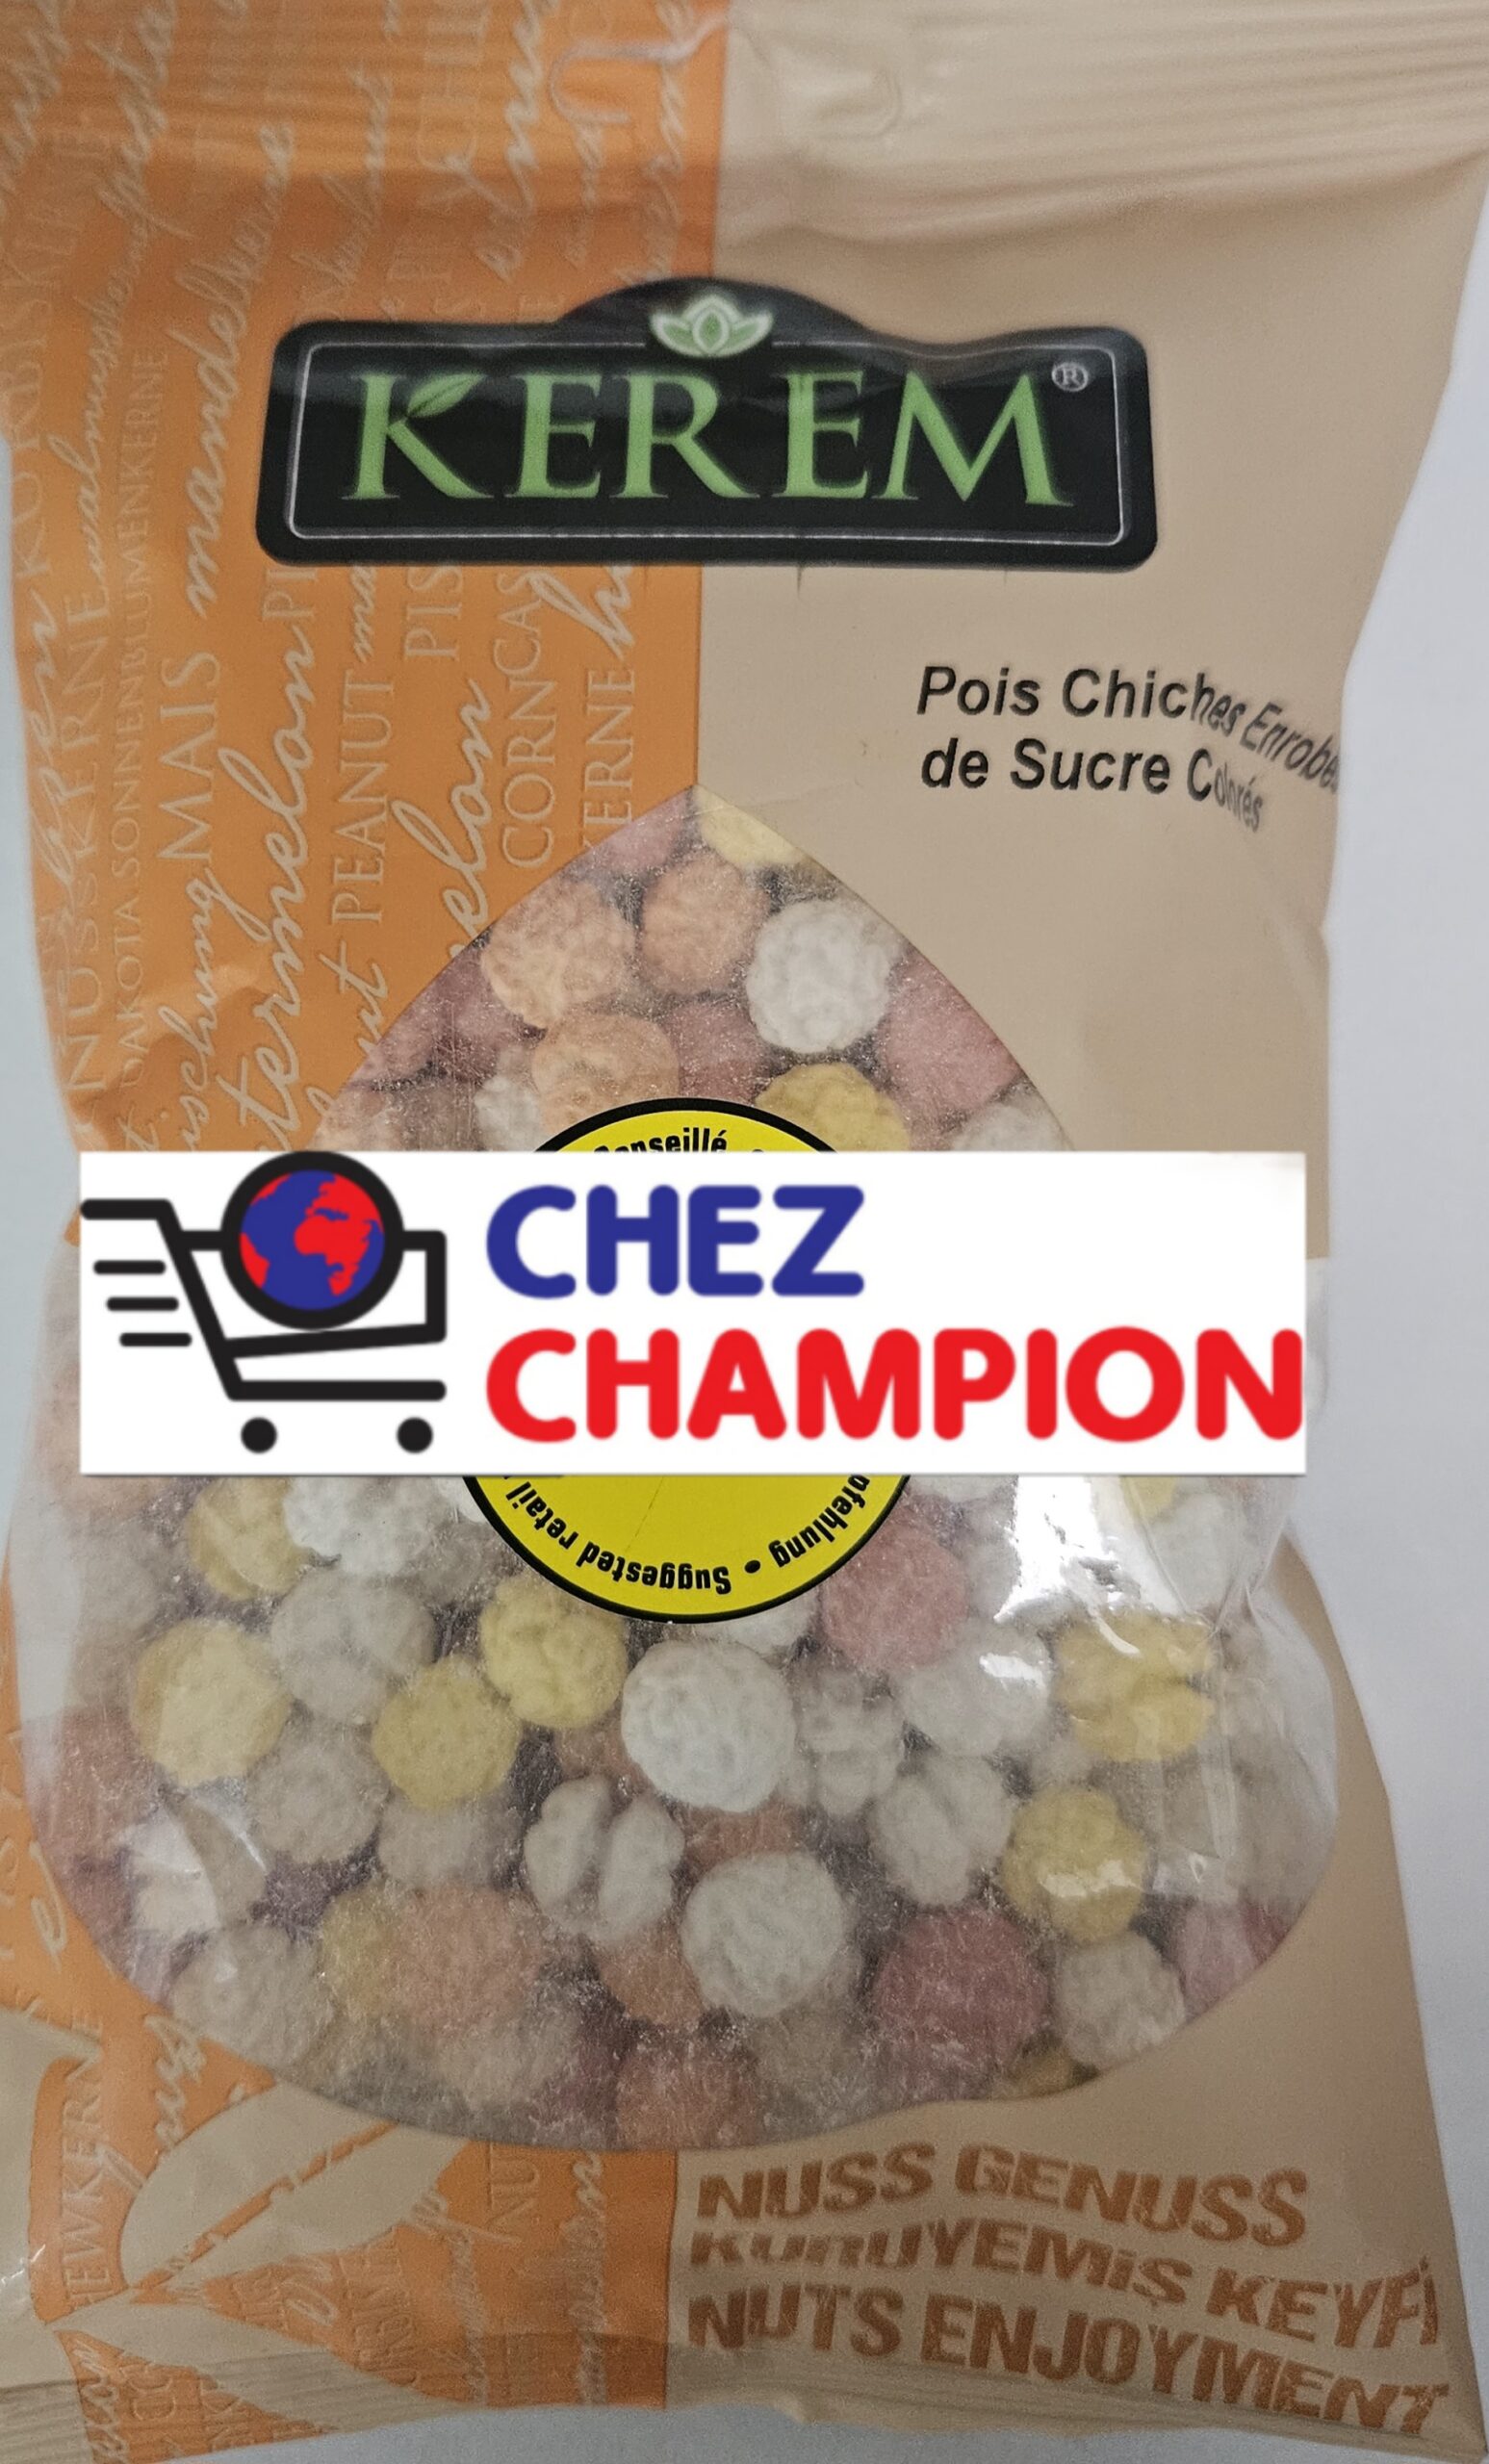 Kerem kuruyemis kefi – pois chiche enrobés de sucre colorés – bunte zuckerüberzogene Kichererbsen – 250g